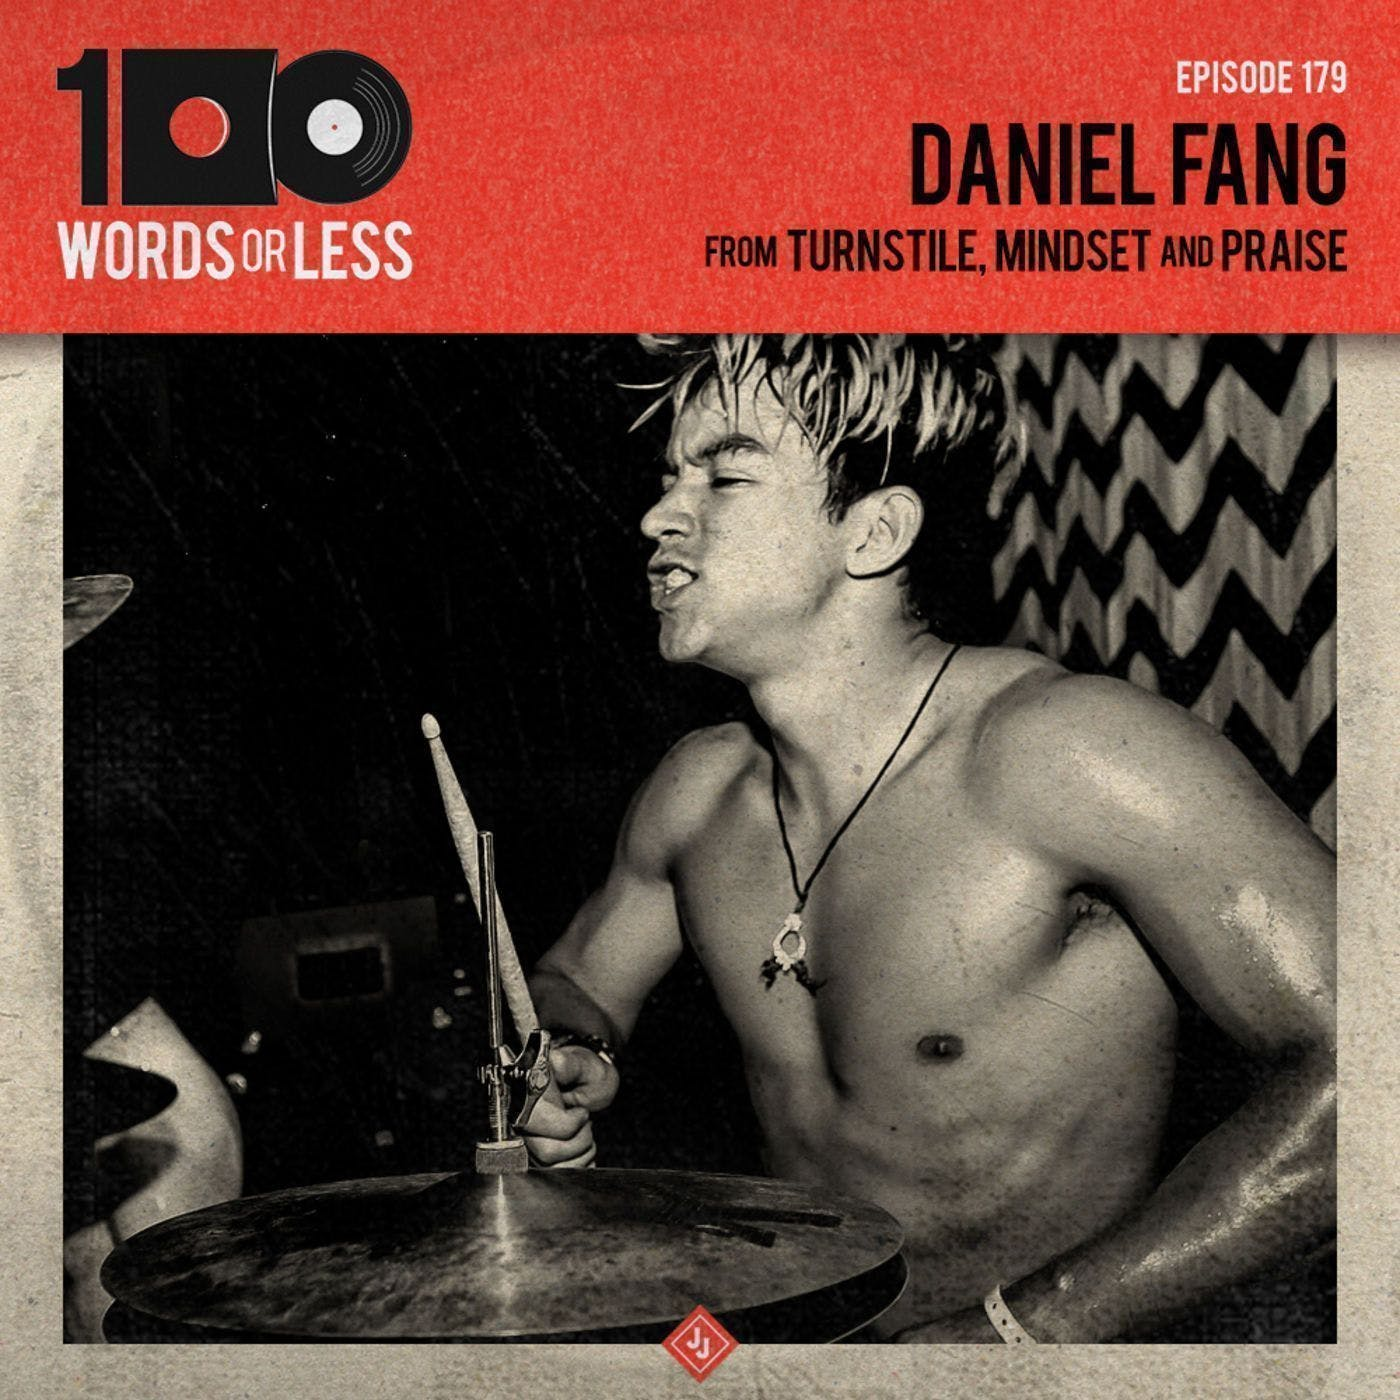 Daniel Fang from Turnstile, Mindset and Praise